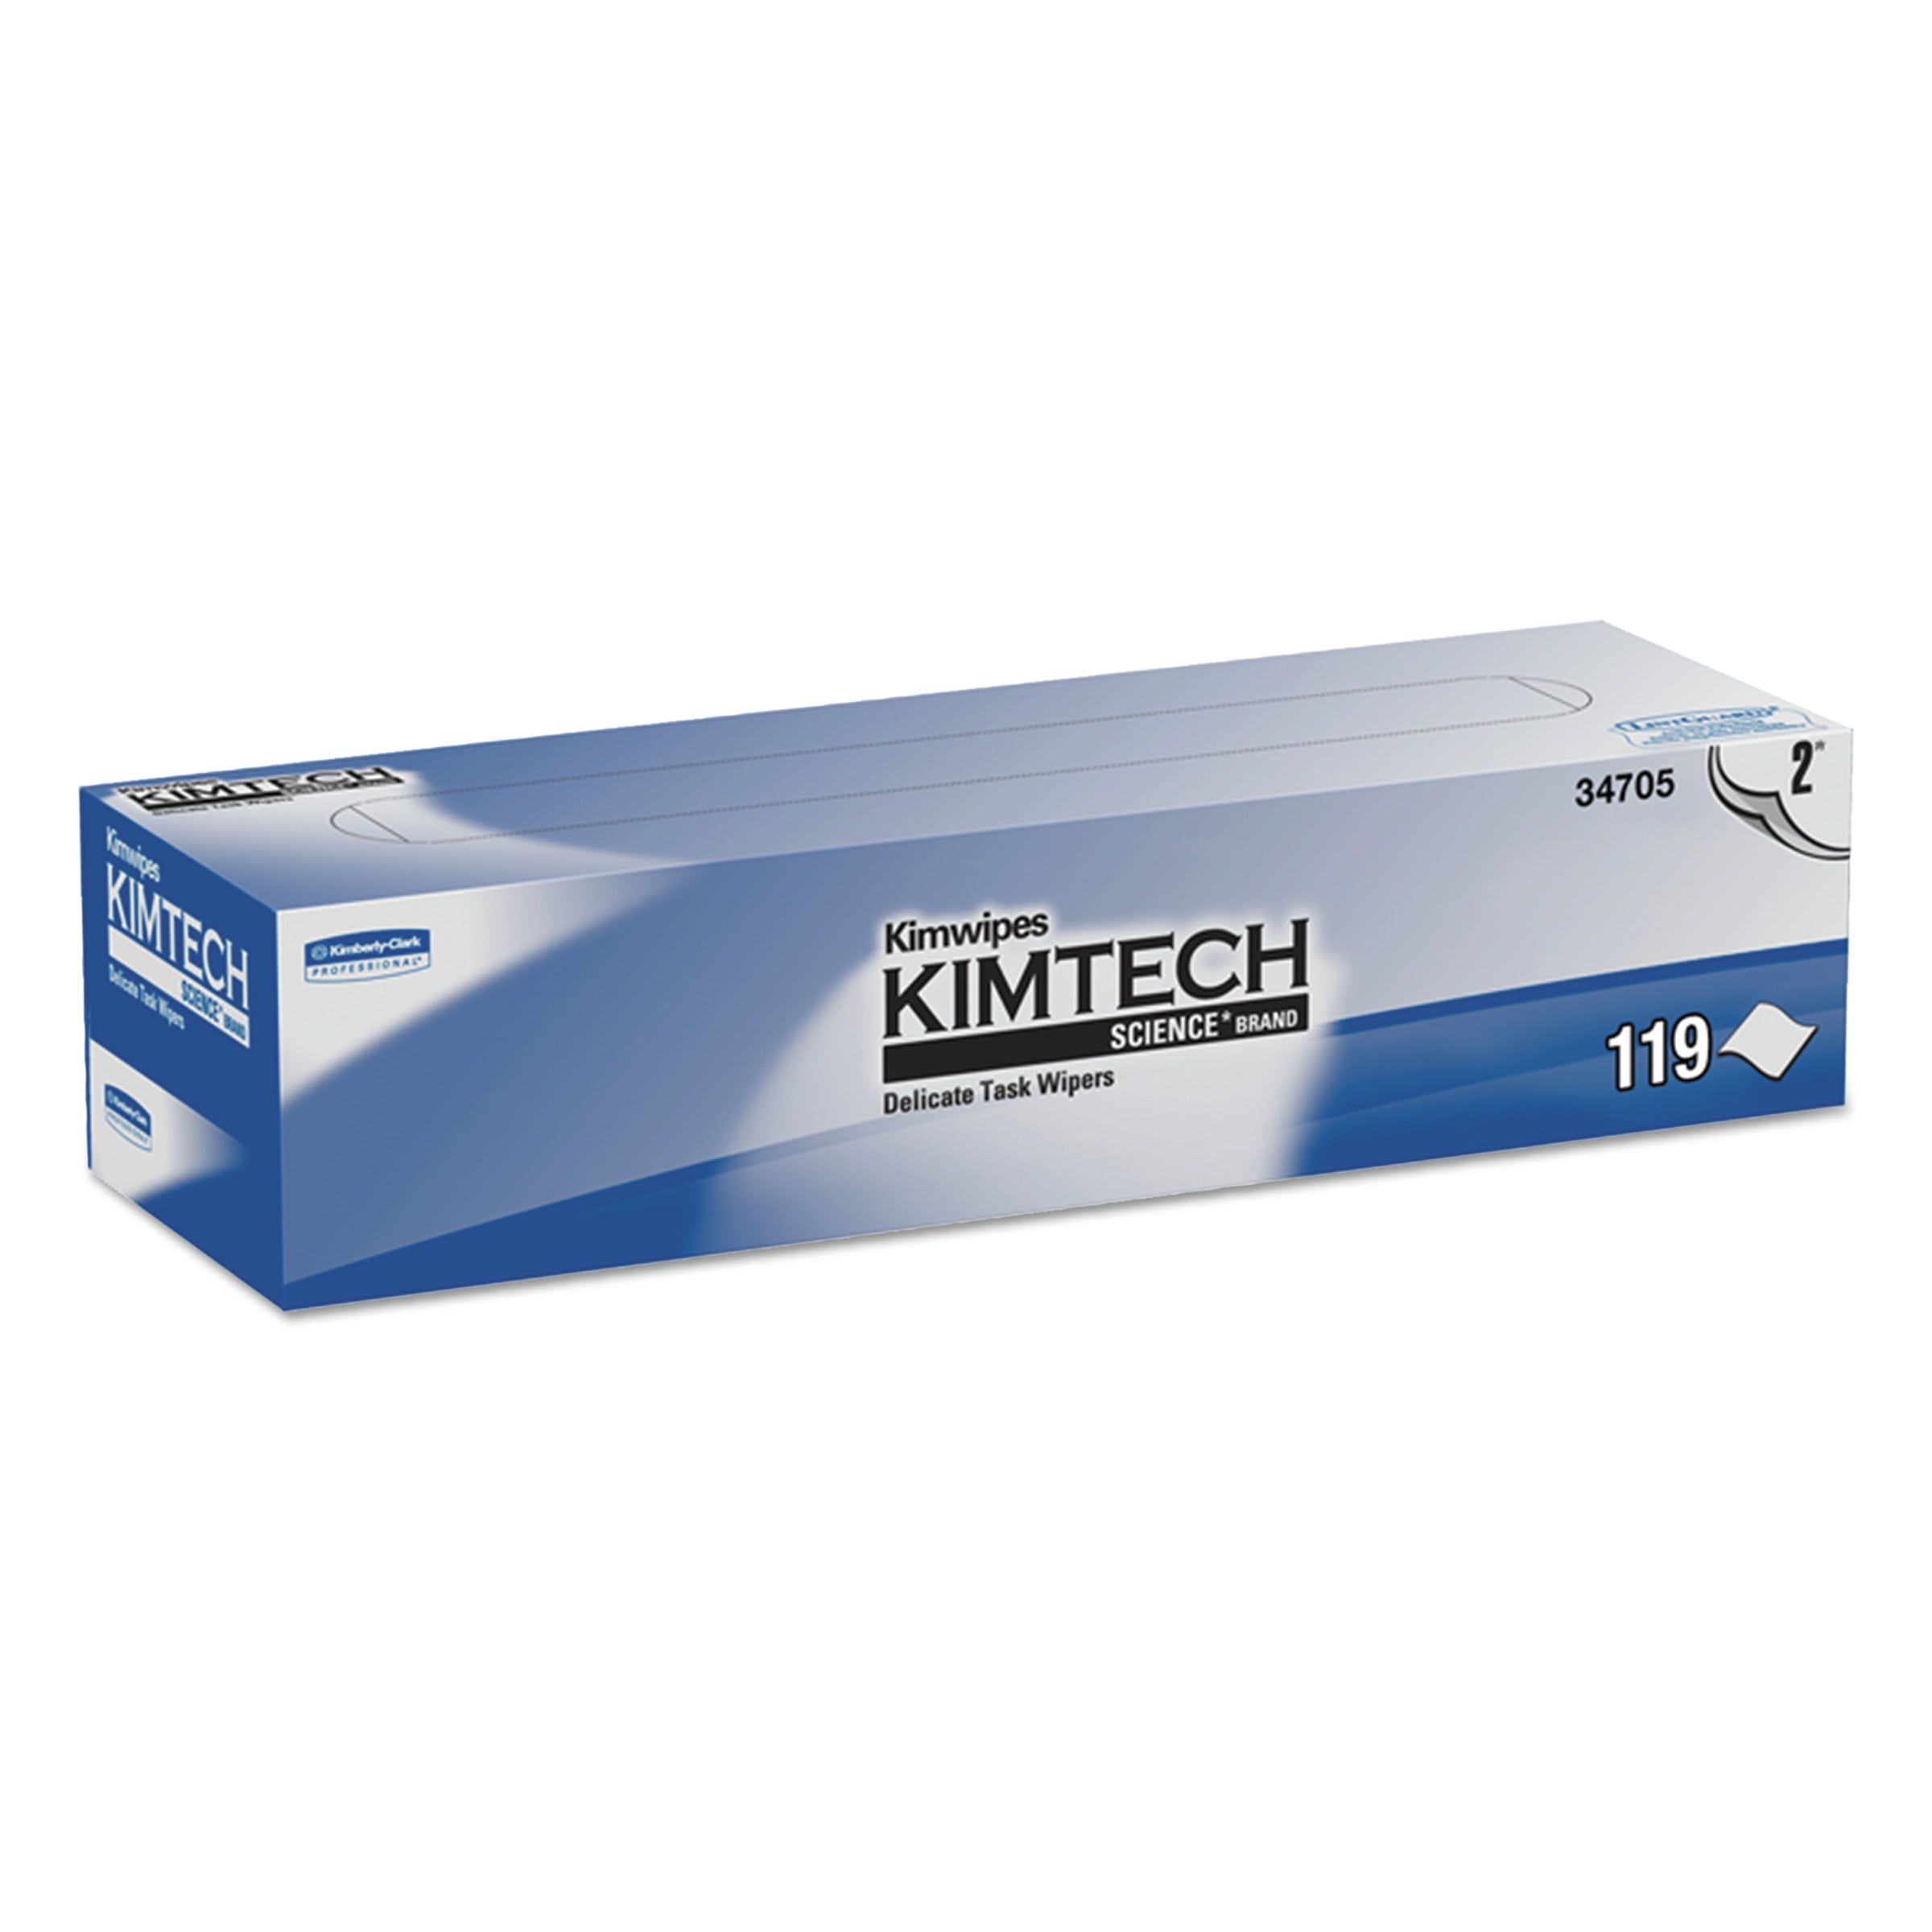 Two Boxes Kimtech* KIMWIPES Delicate Task Wipers 4 2/5 x 8 2/5 280/Box 34155 